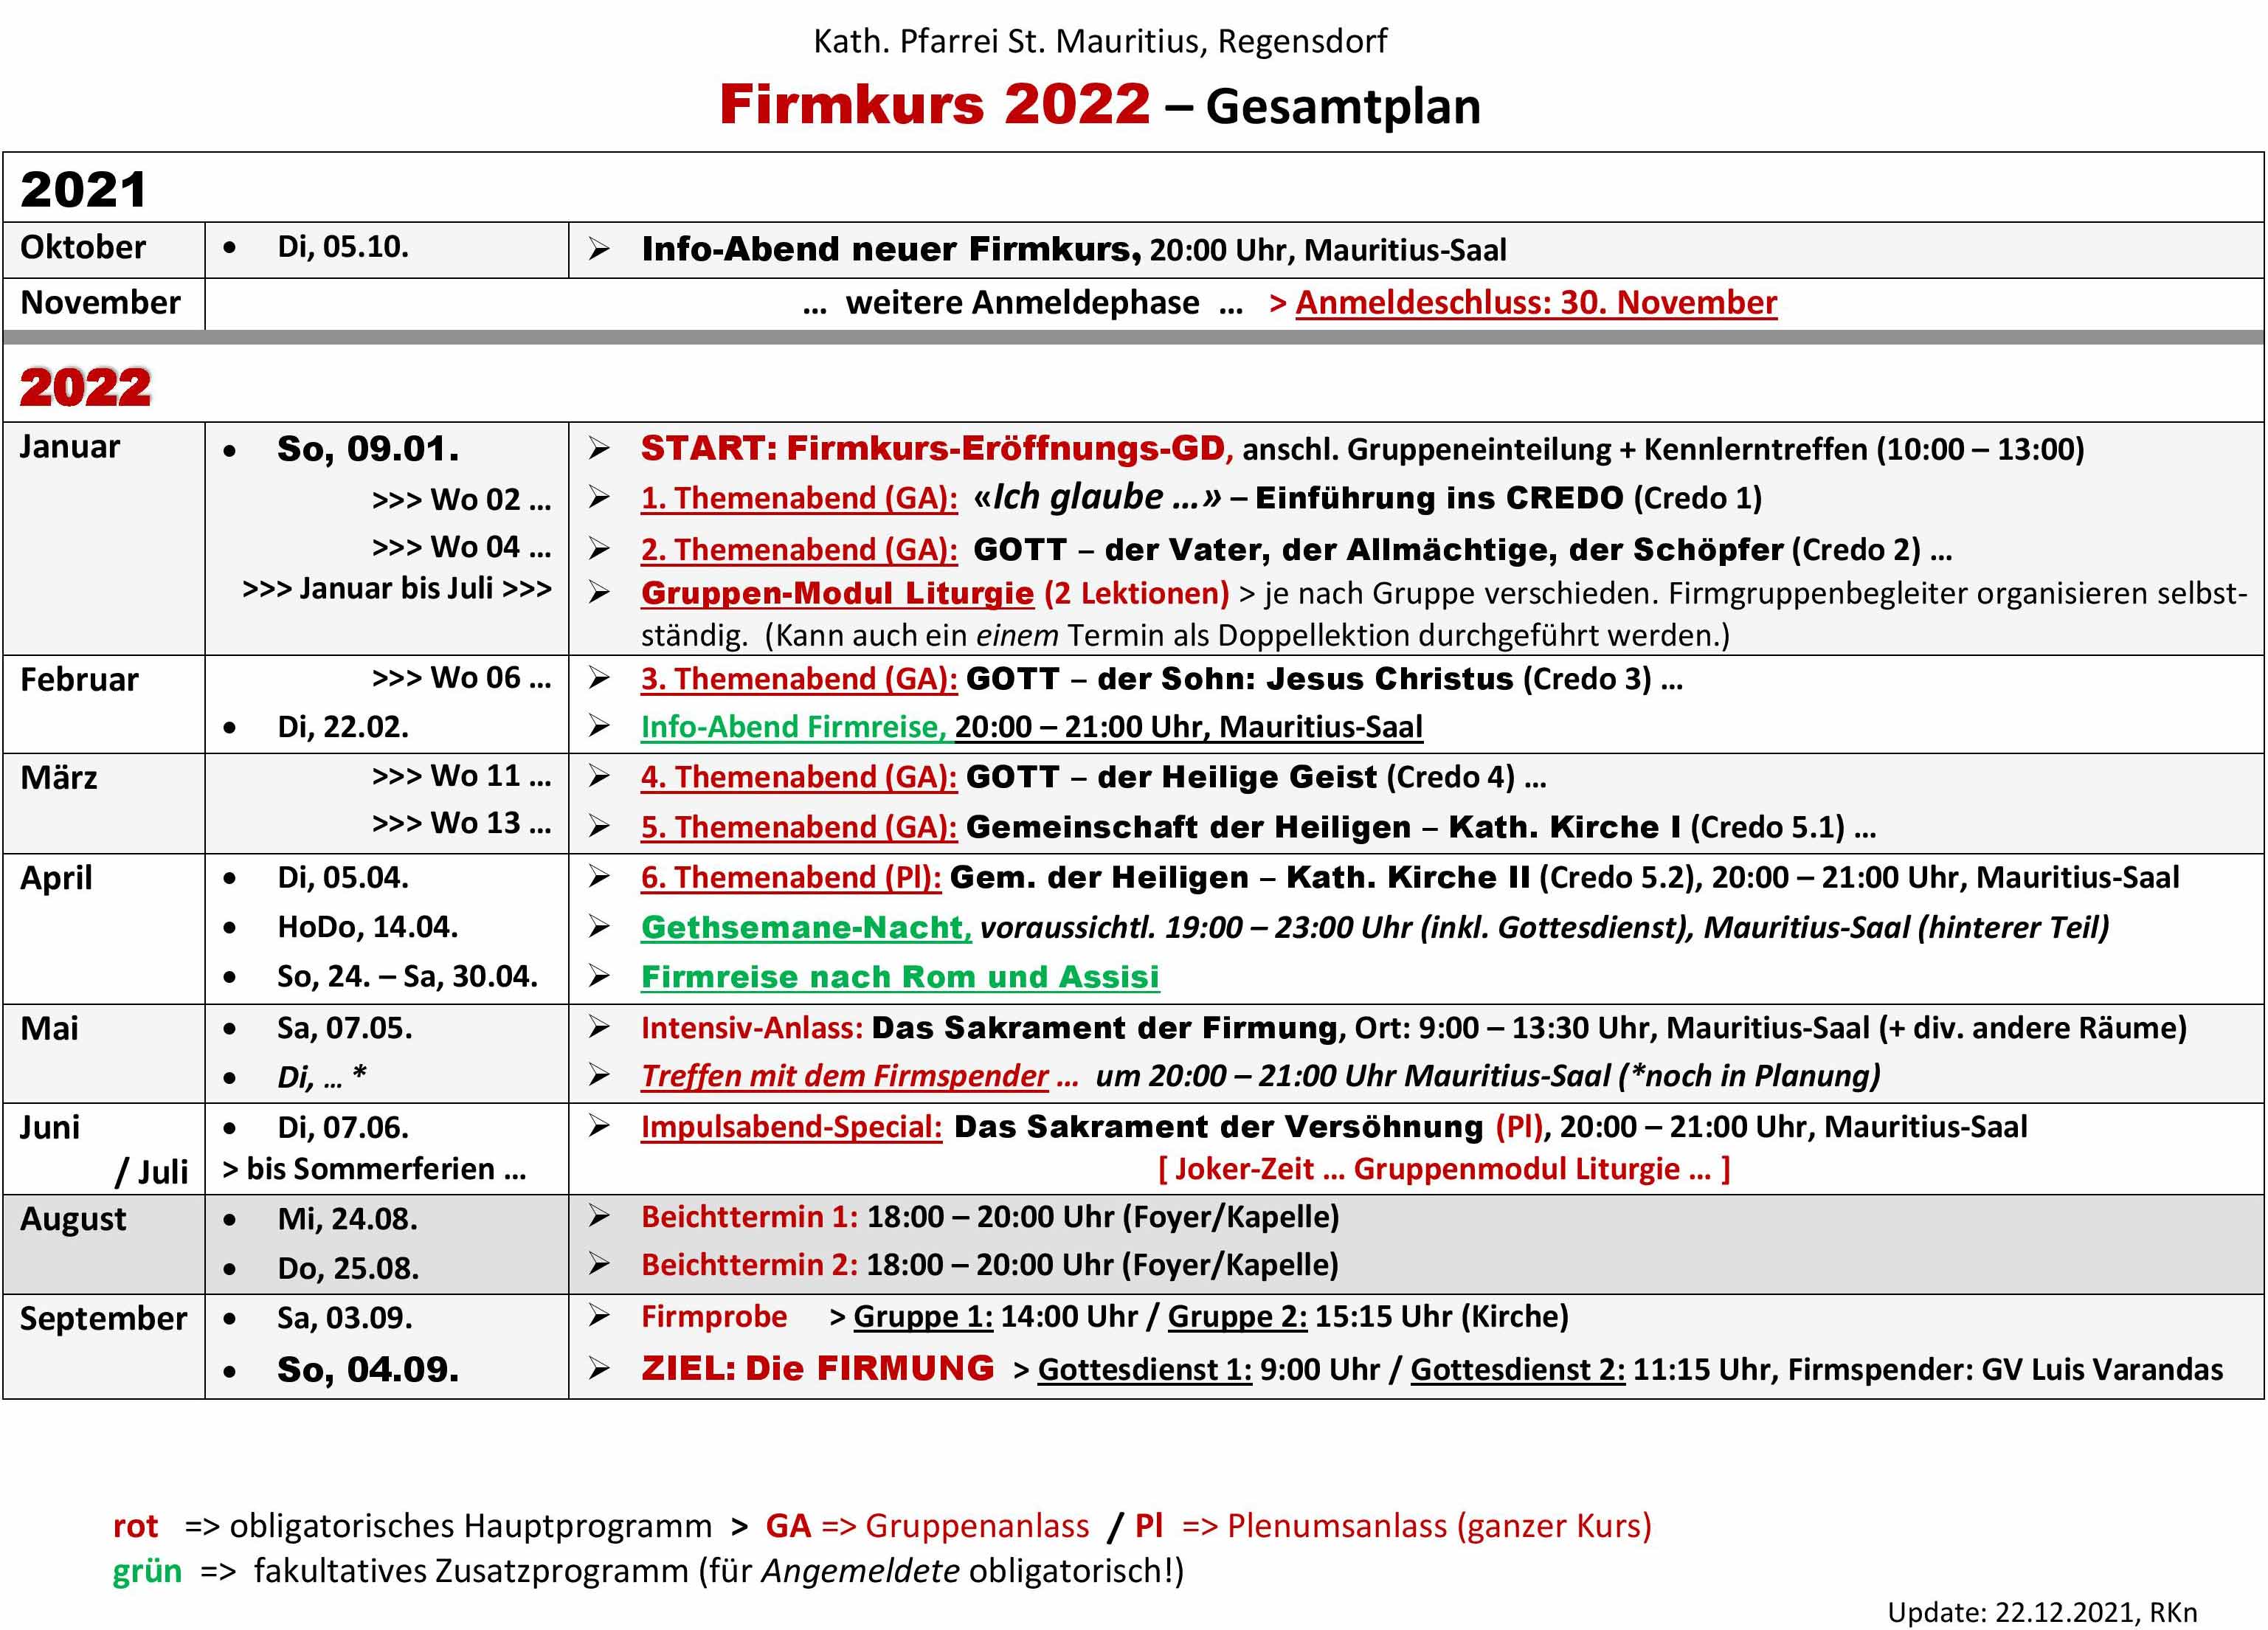 Terminplan Firmkurs 2022 Vers 3 22.12.2021 1 page 001